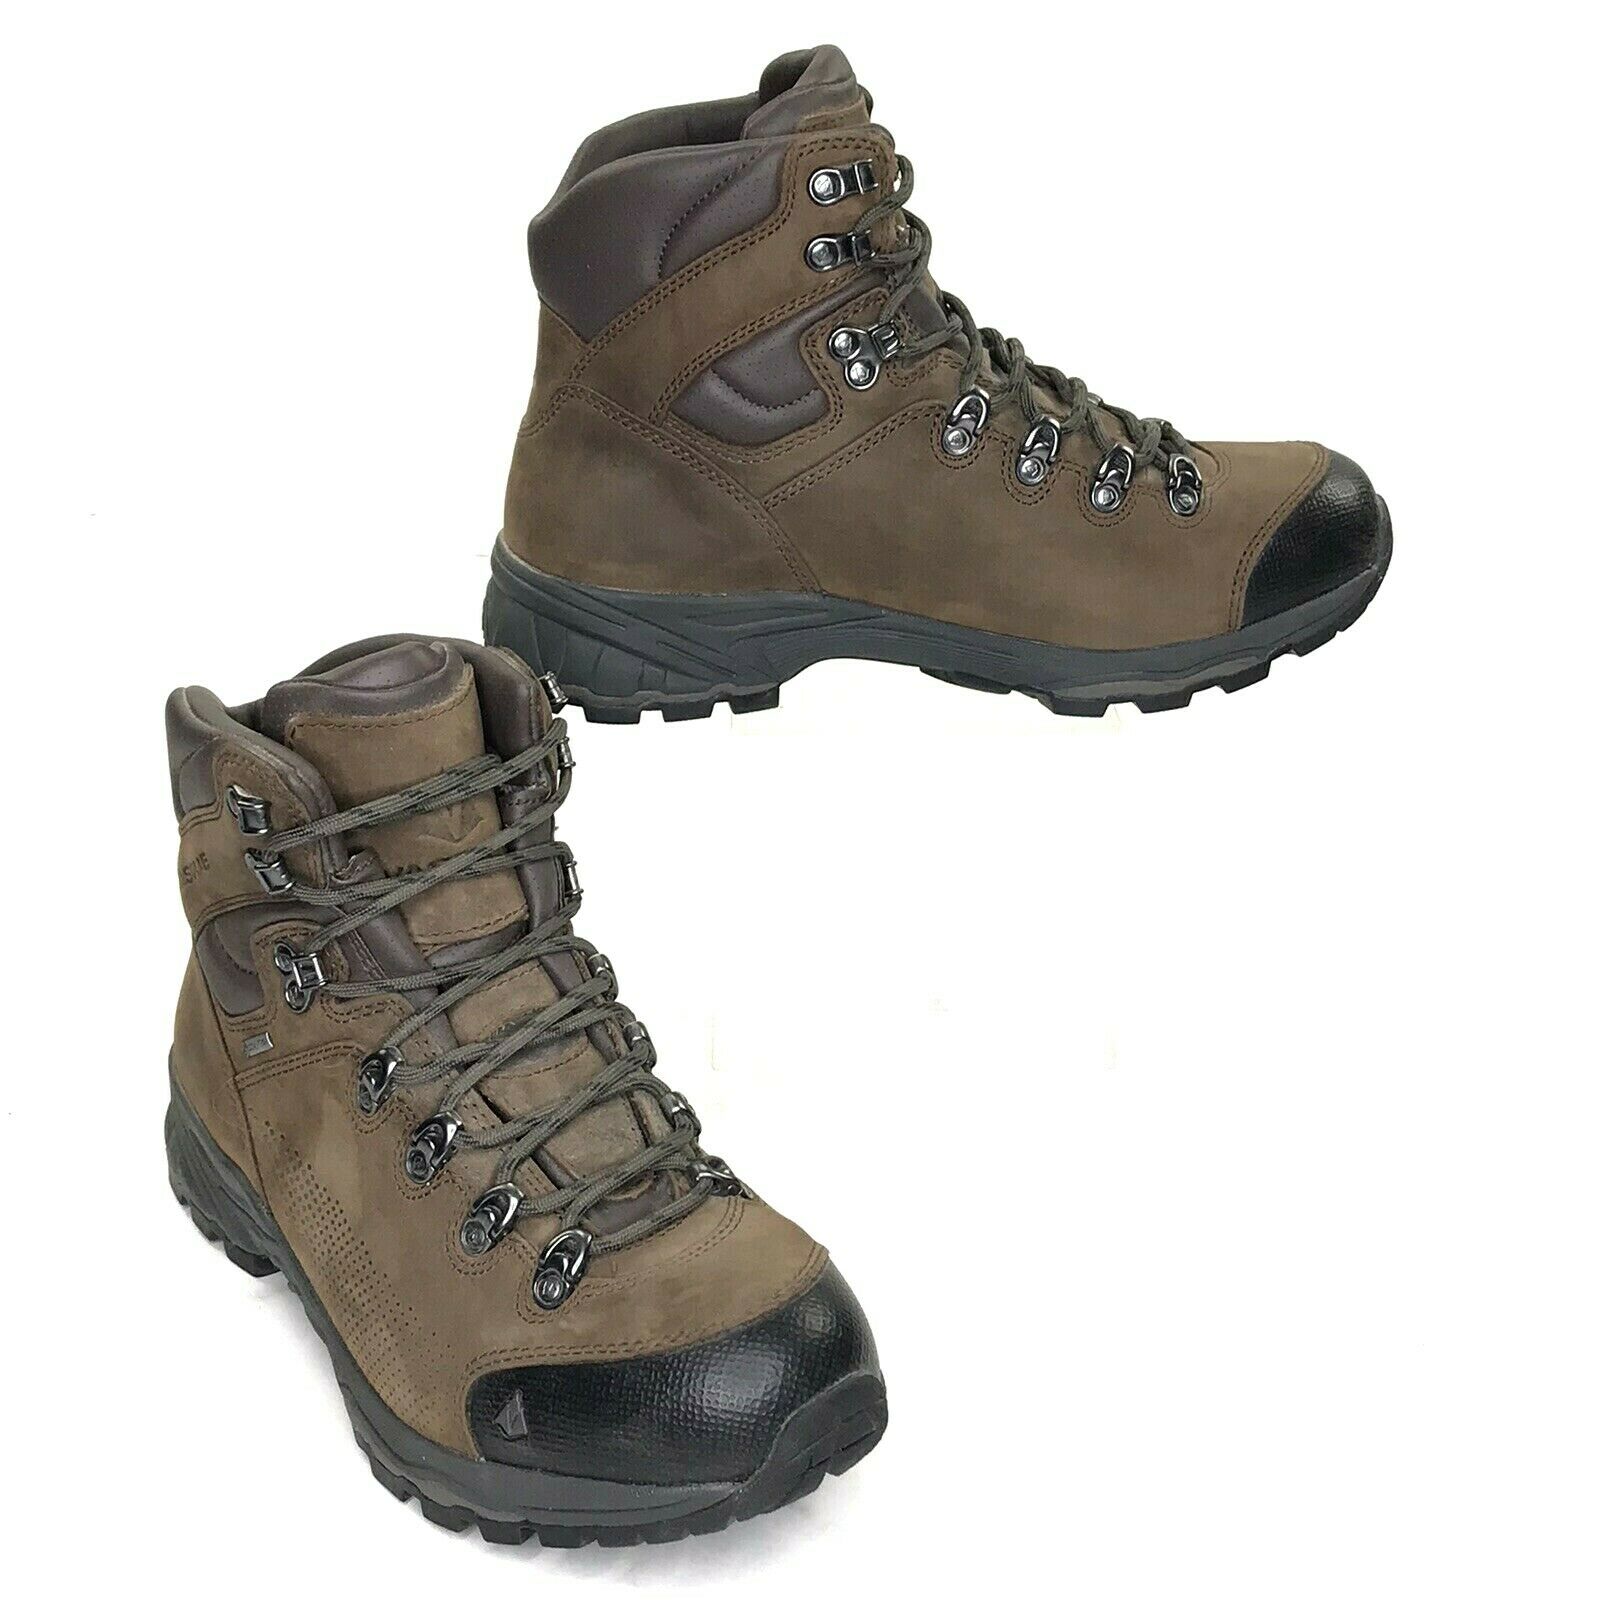 Vasque Men's St. Elias GTX Hiking Boots 7160 M Nubuck Leather Brown Size US 9